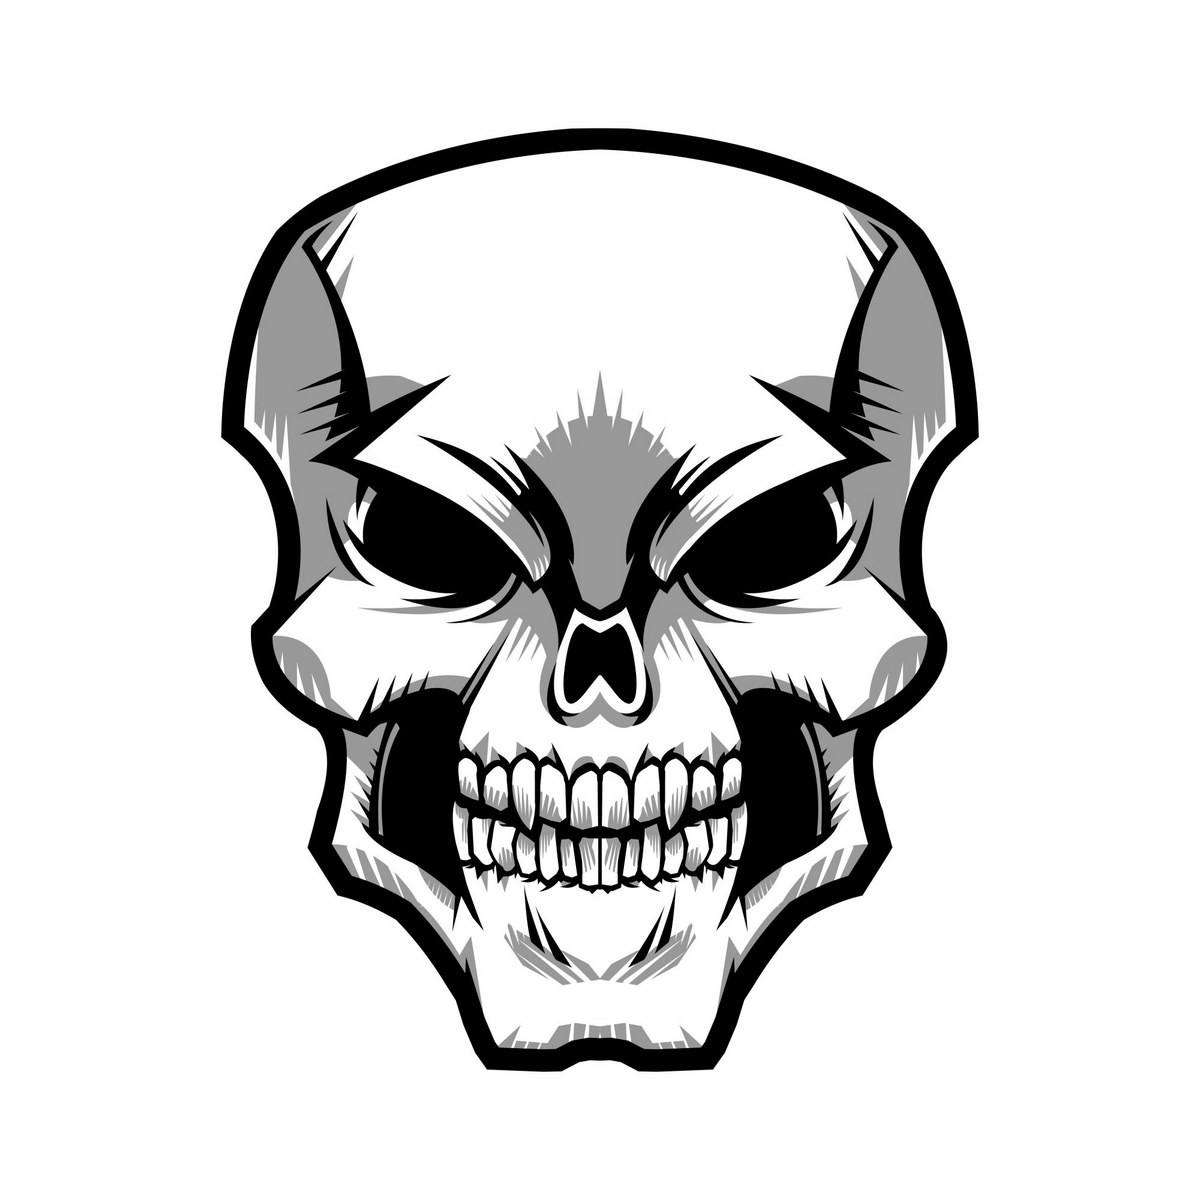 Skull graphic